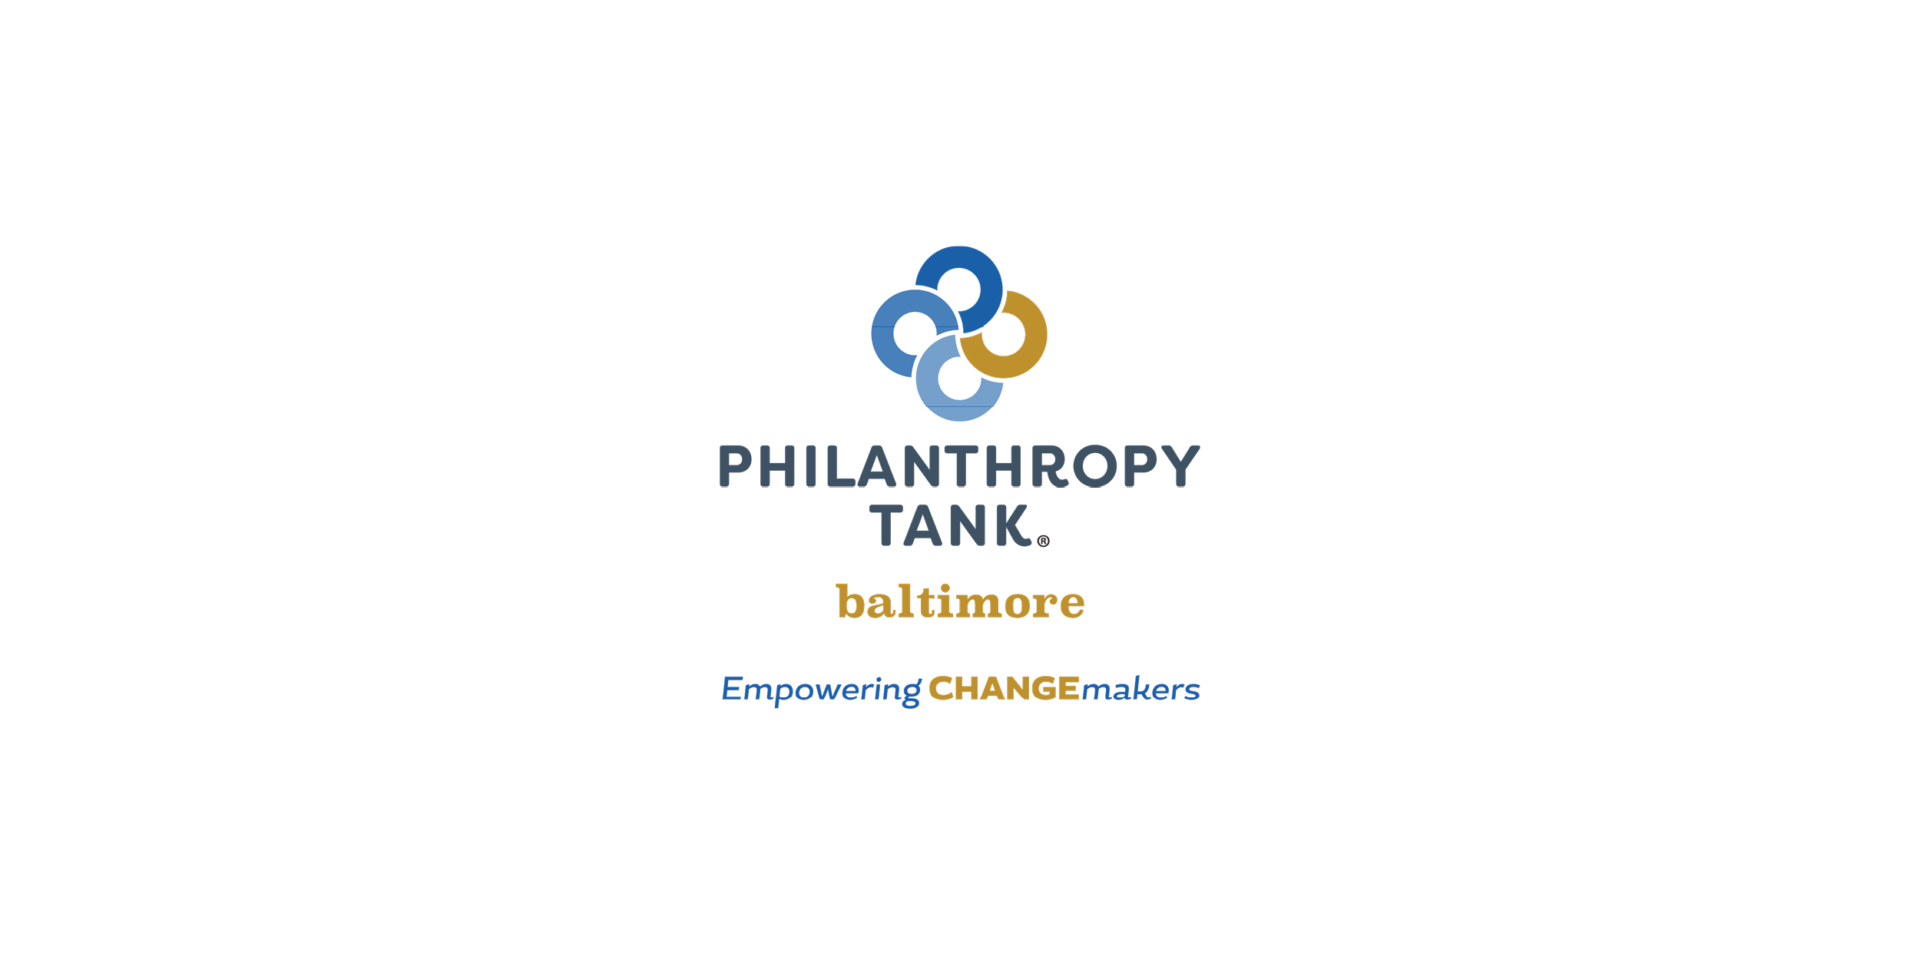 interior Introducing Baltimore’s New Executive Director banner image